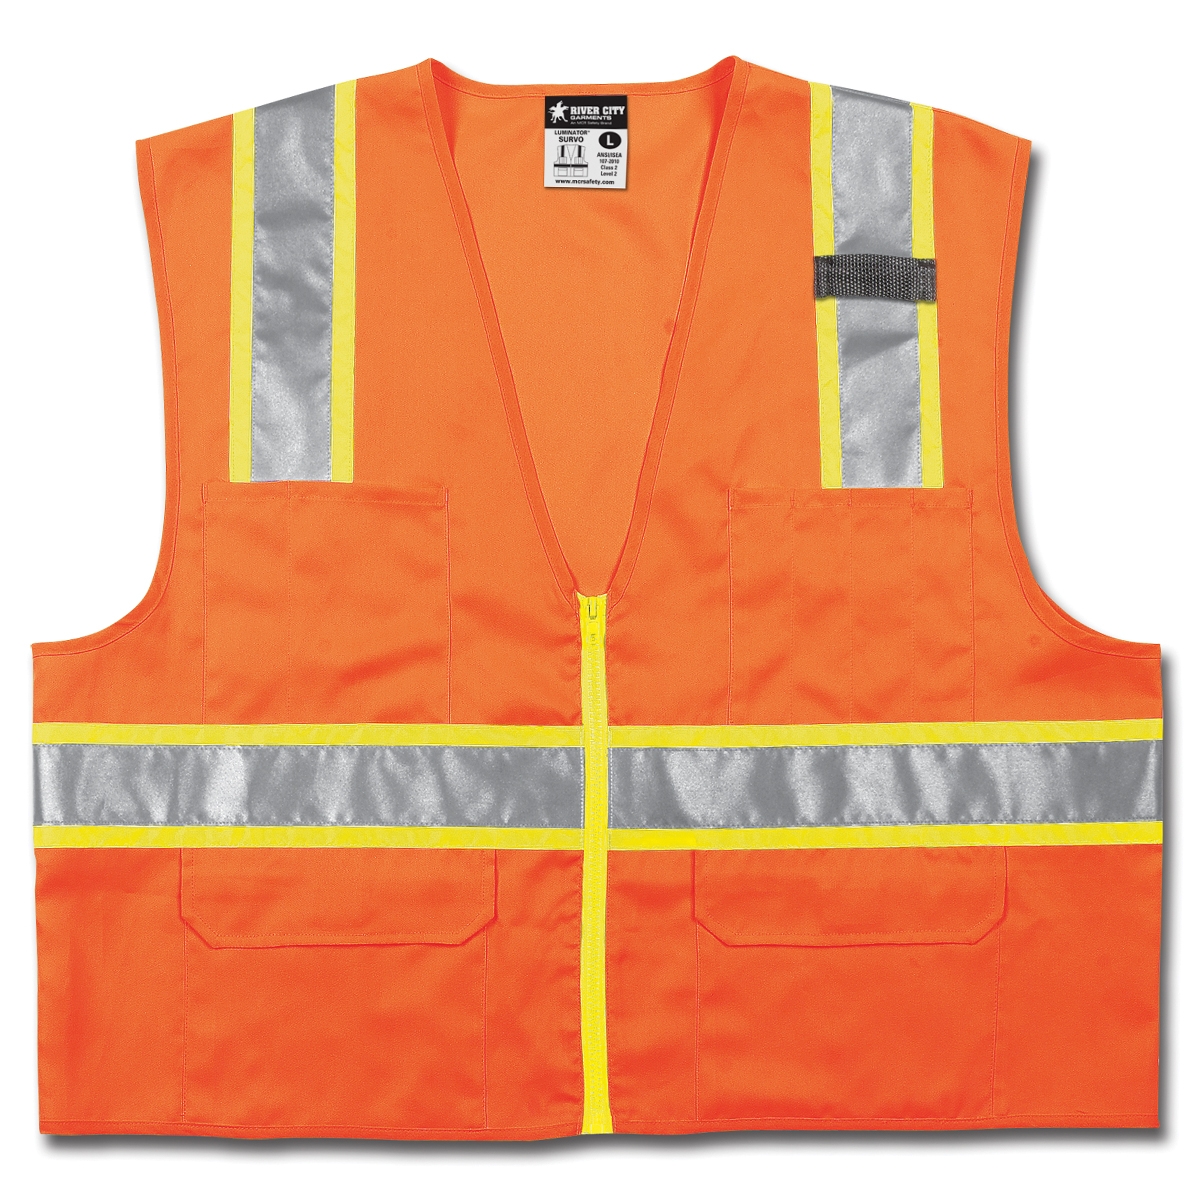 River City SURVO Type R Class 2 Two-Tone Solid Surveyor Safety Vest ...